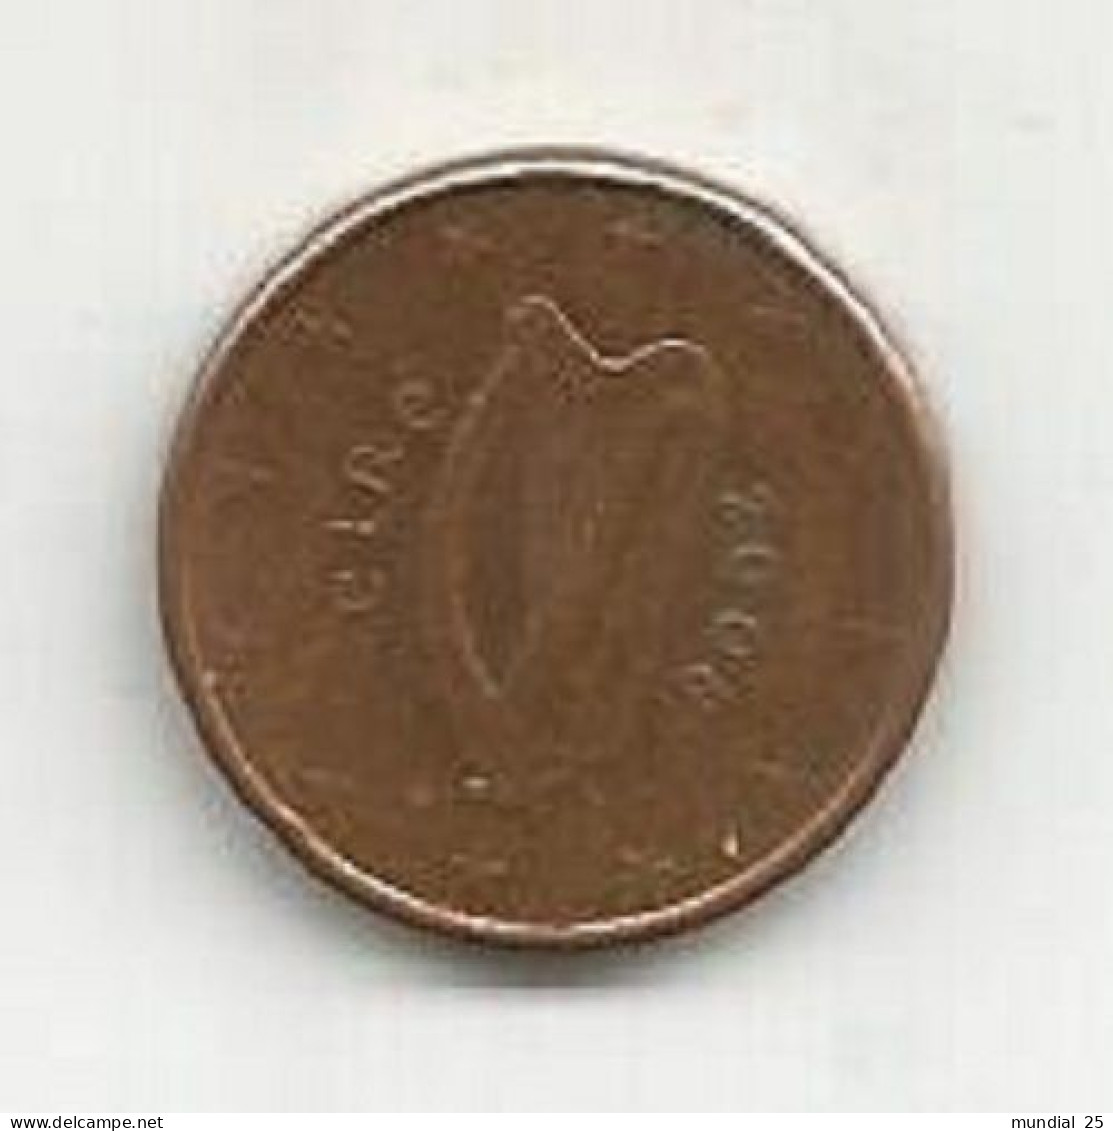 IRELAND 1 EURO CENT 2008 - Ireland